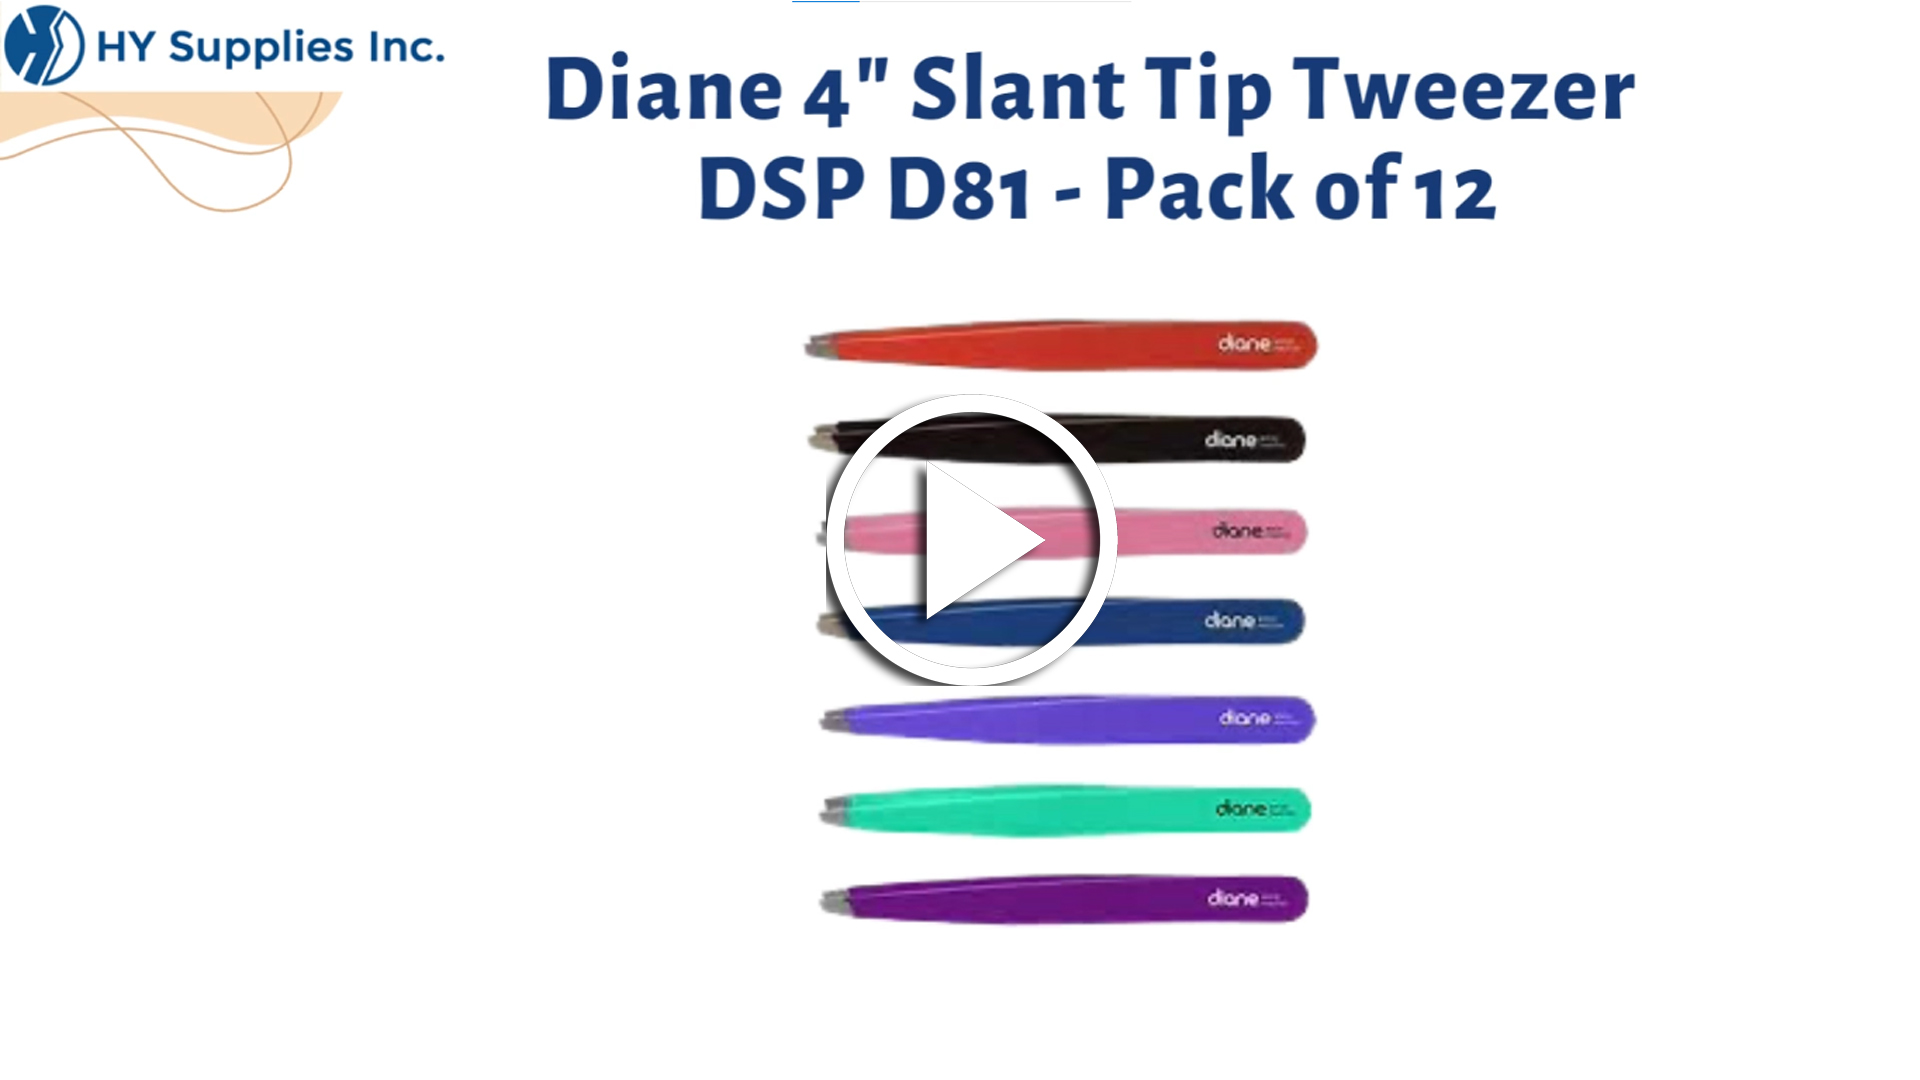 Diane 4" Slant Tip Tweezer DSP D81 - Pack of 12